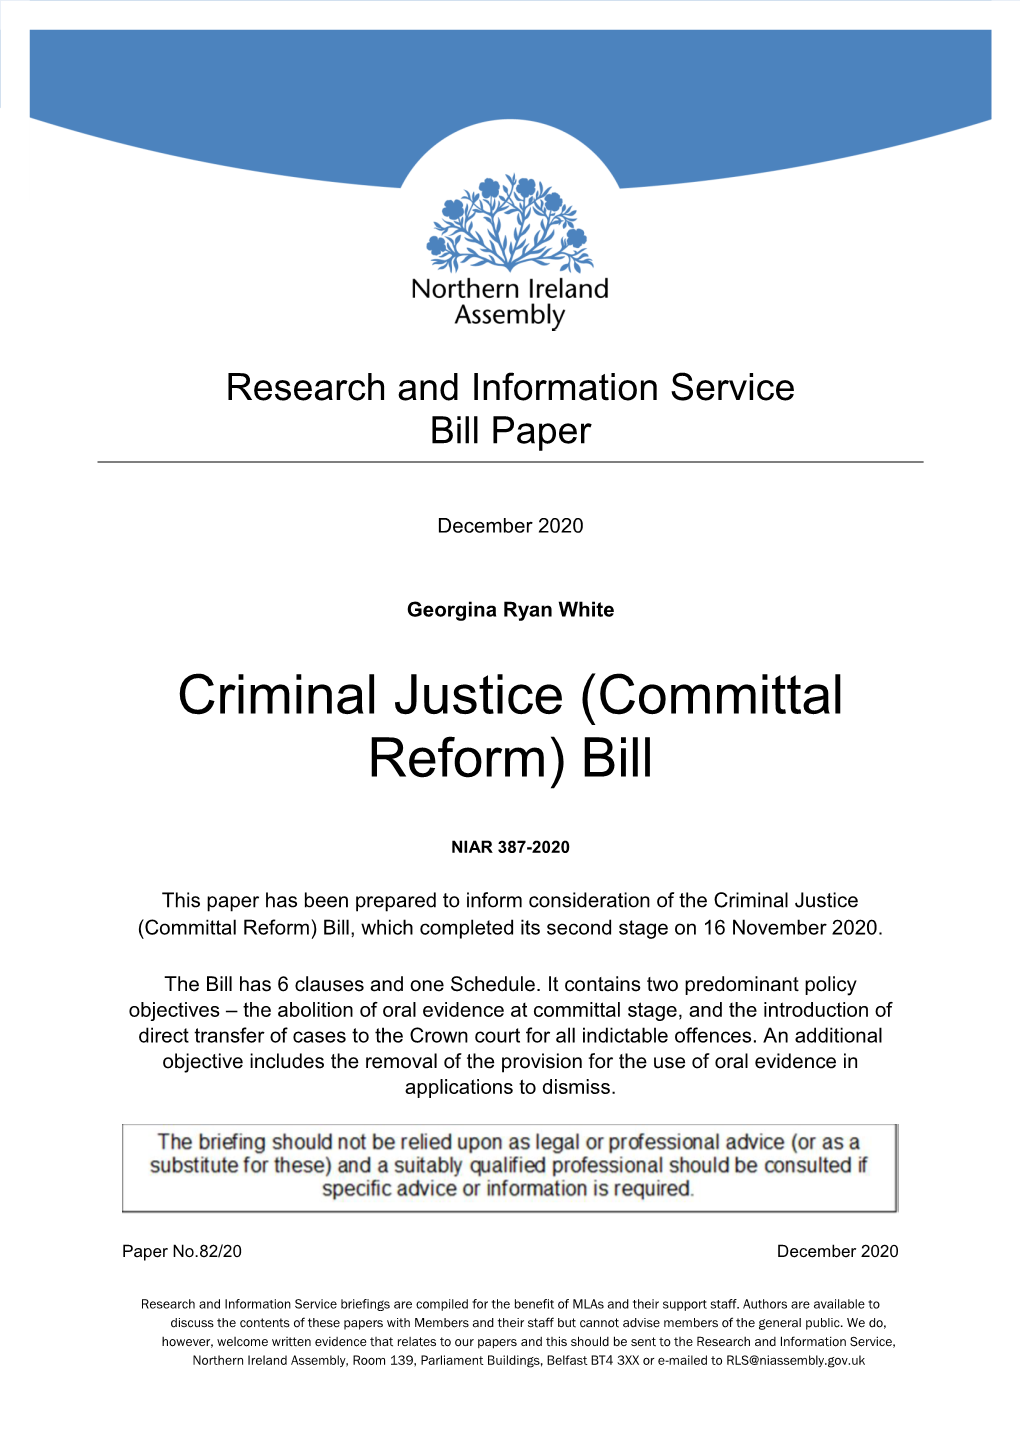 Criminal Justice (Committal Reform) Bill